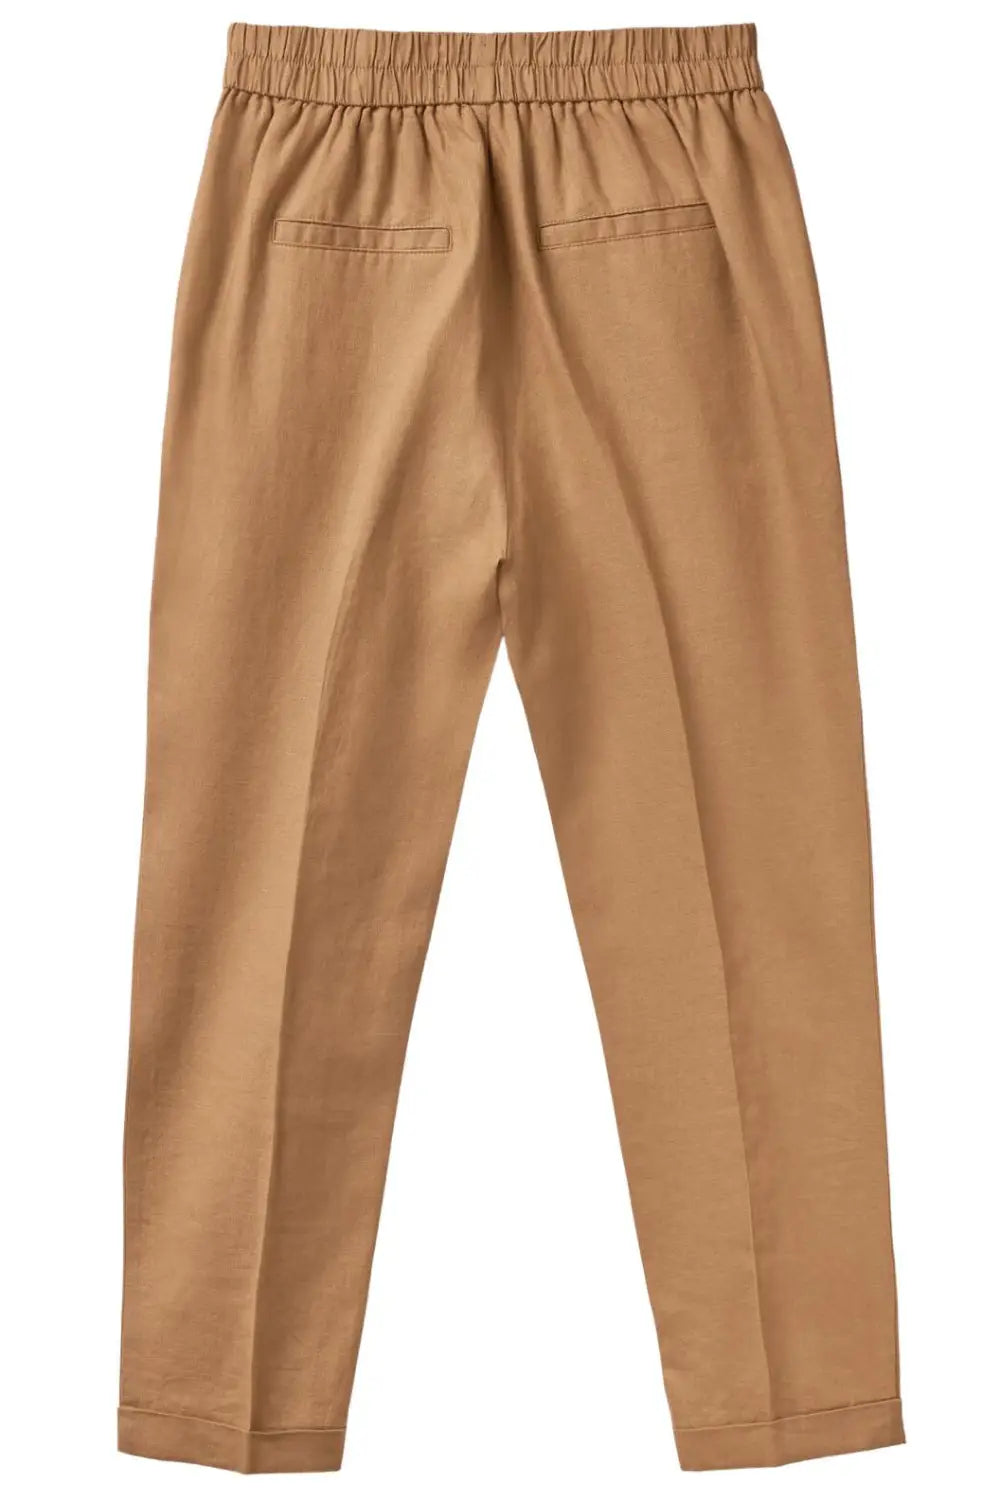 Benetton Linen Crop Trousers